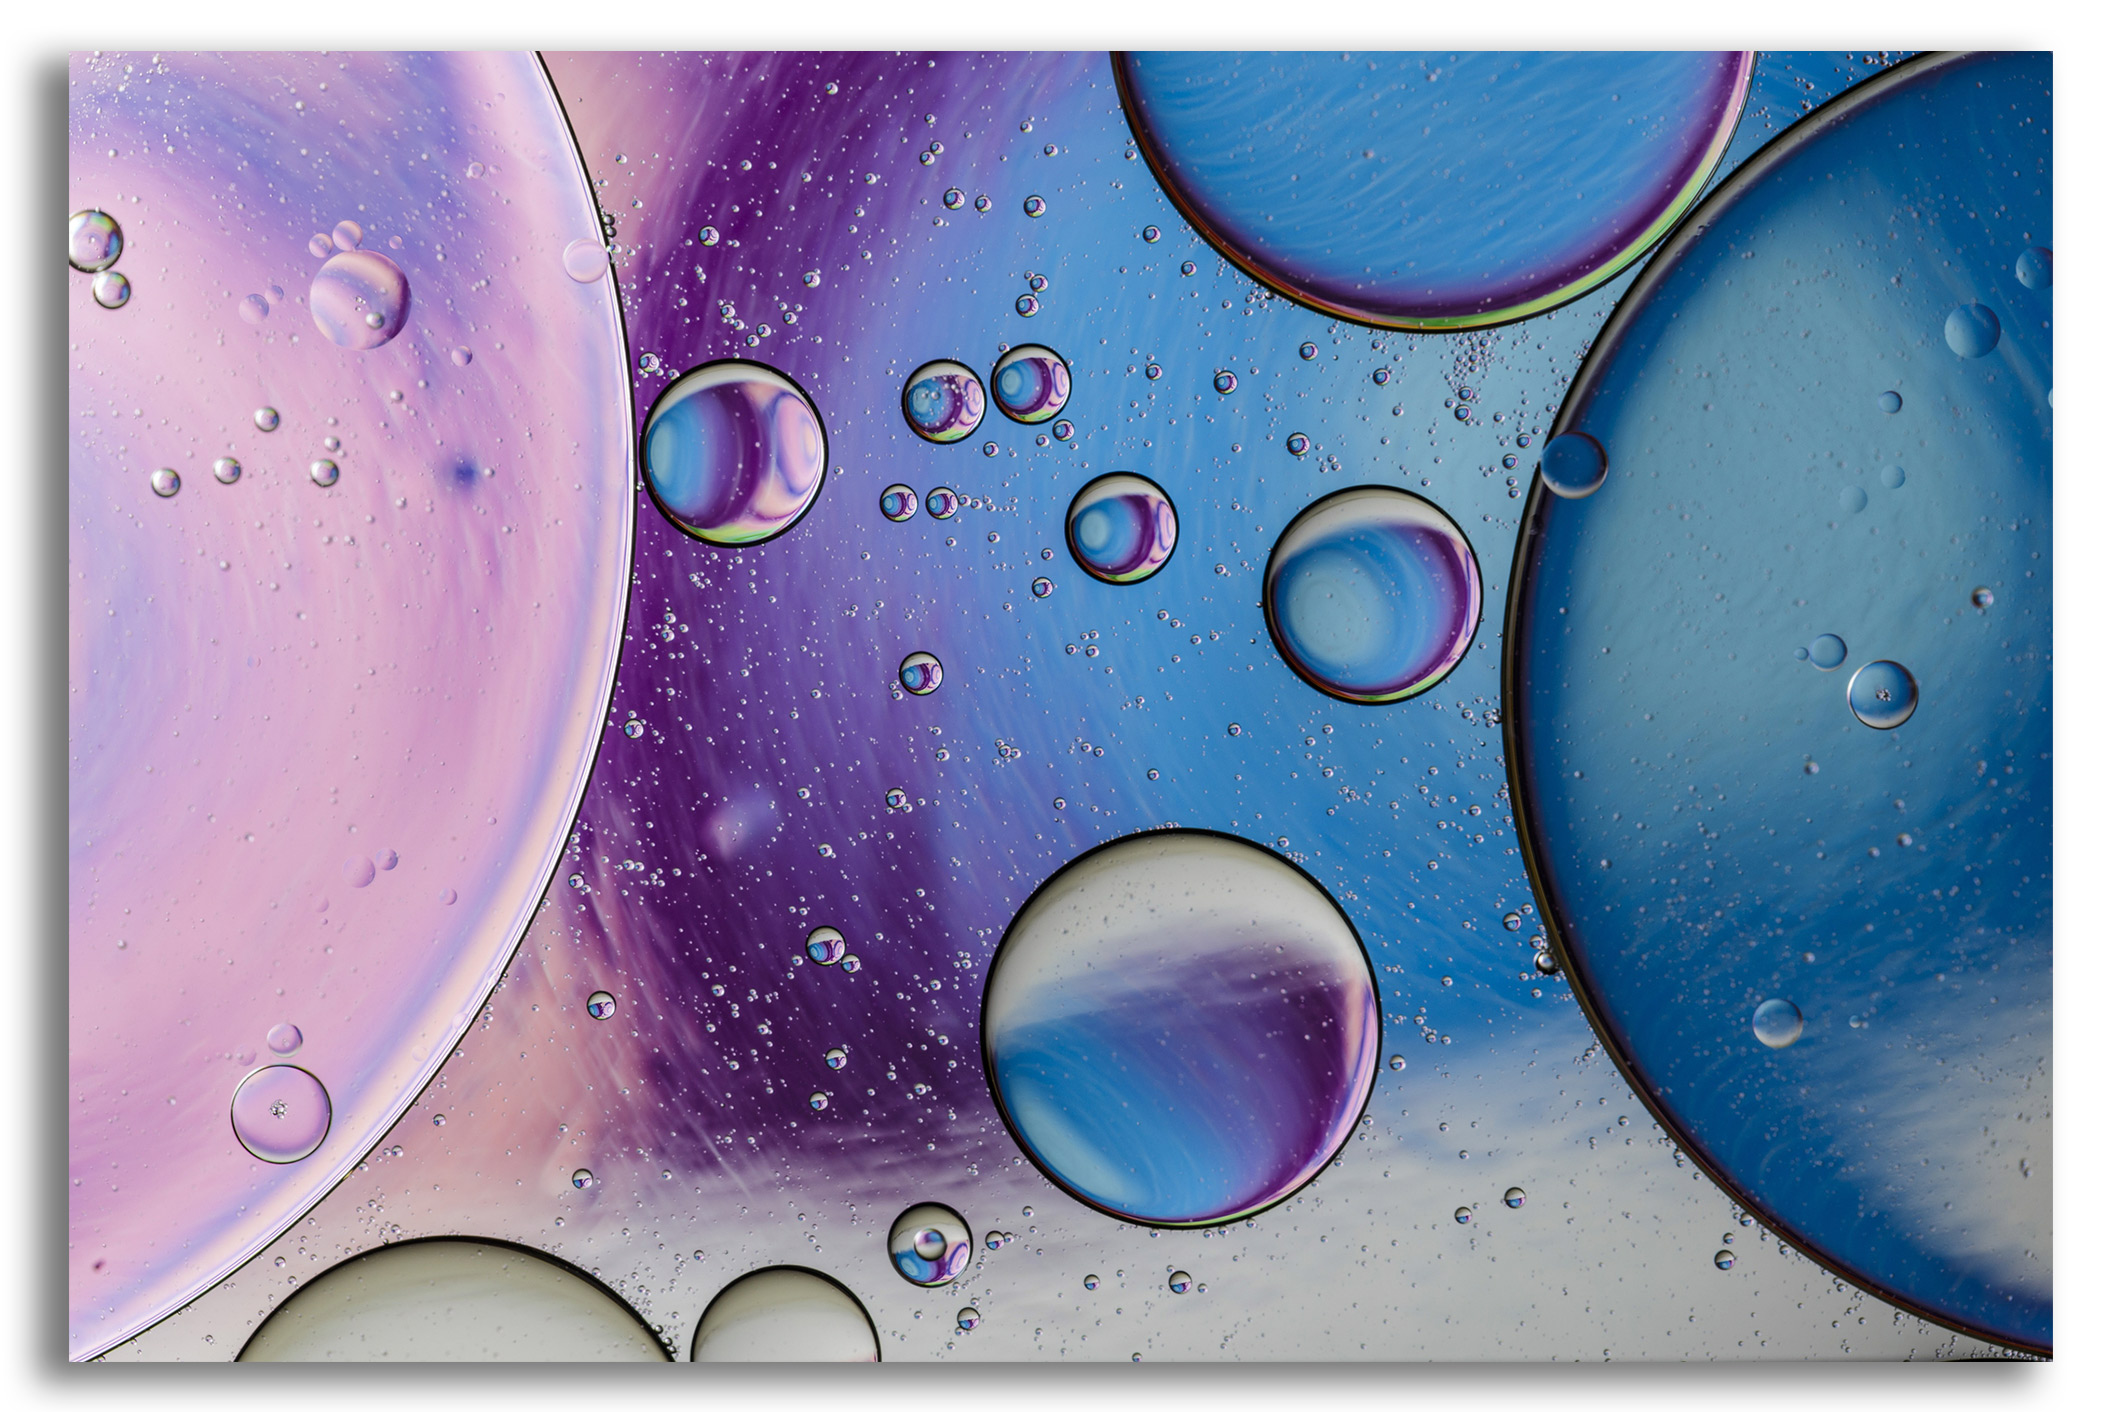 Bubbles, Oil, and Foam Structure